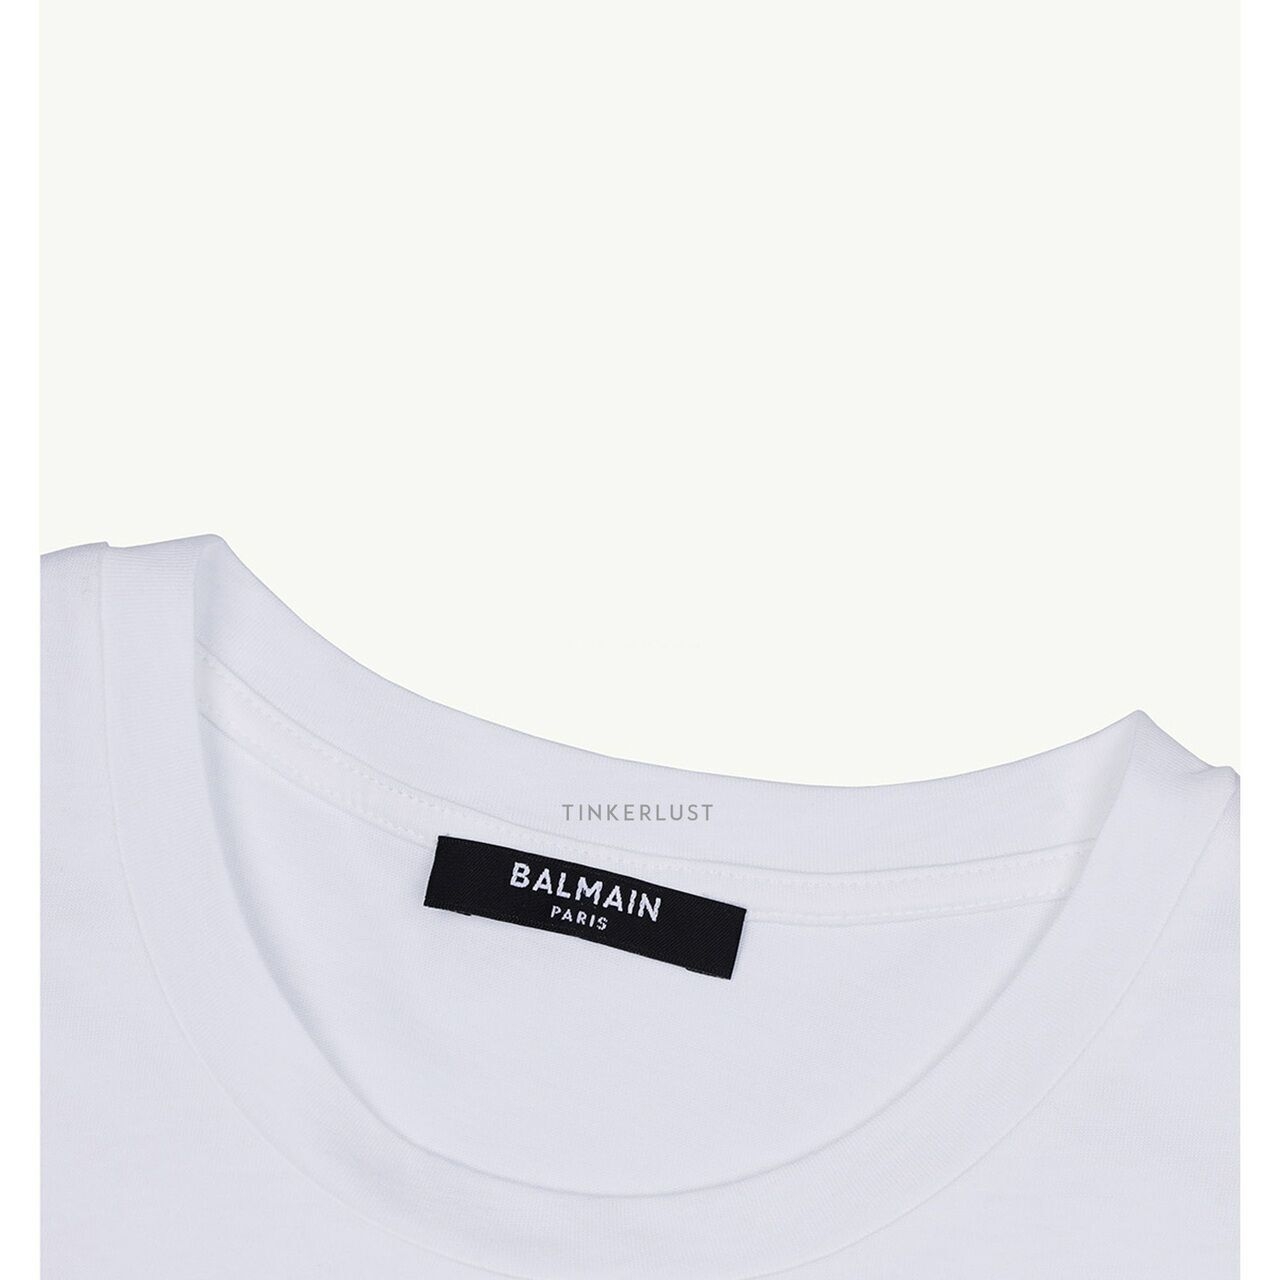 Balmain Women Balmain Paris Metallic Logo T-Shirt in White/Gold